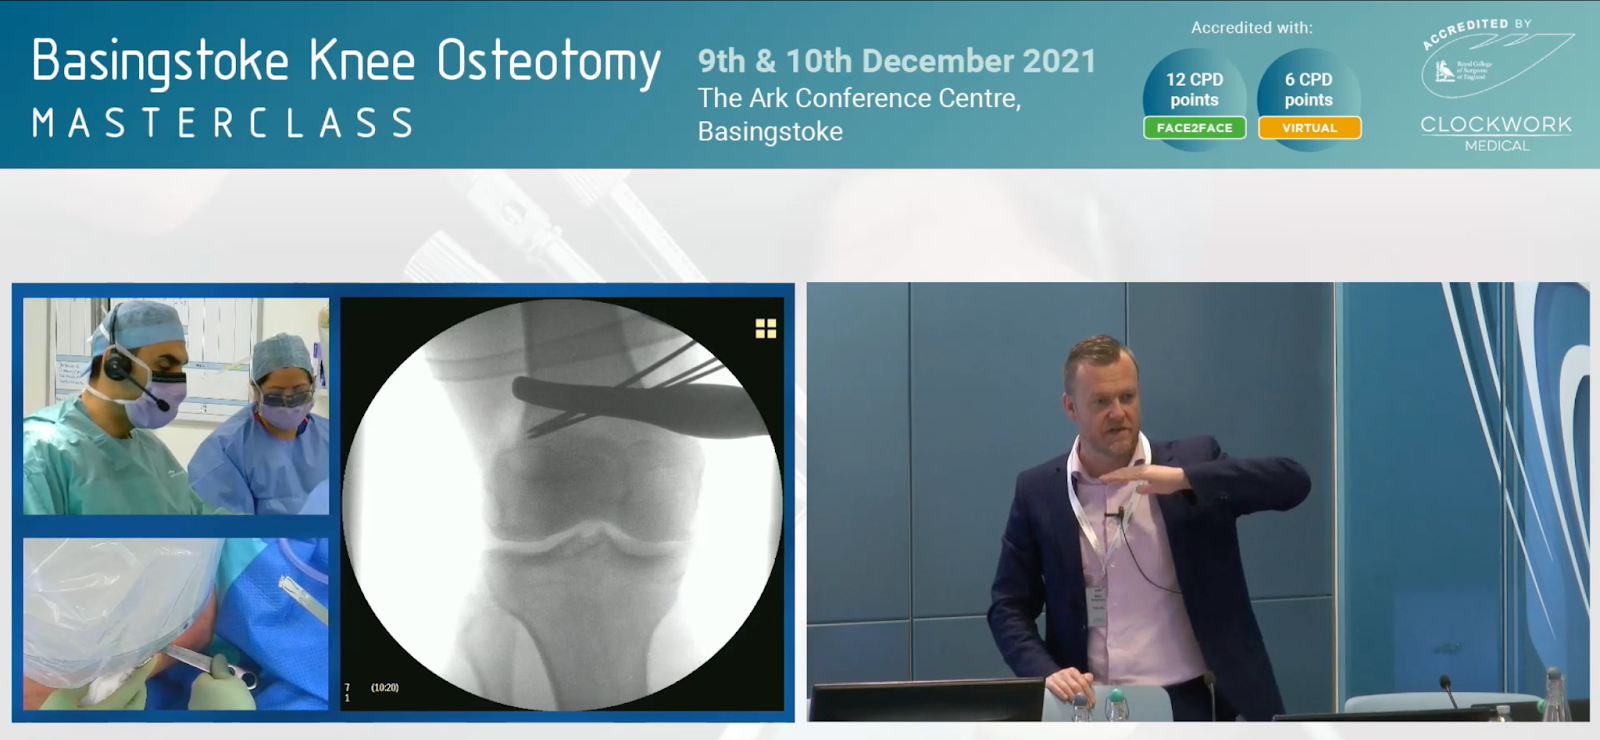 Basingstoke Knee Osteotomy<br>Masterclass